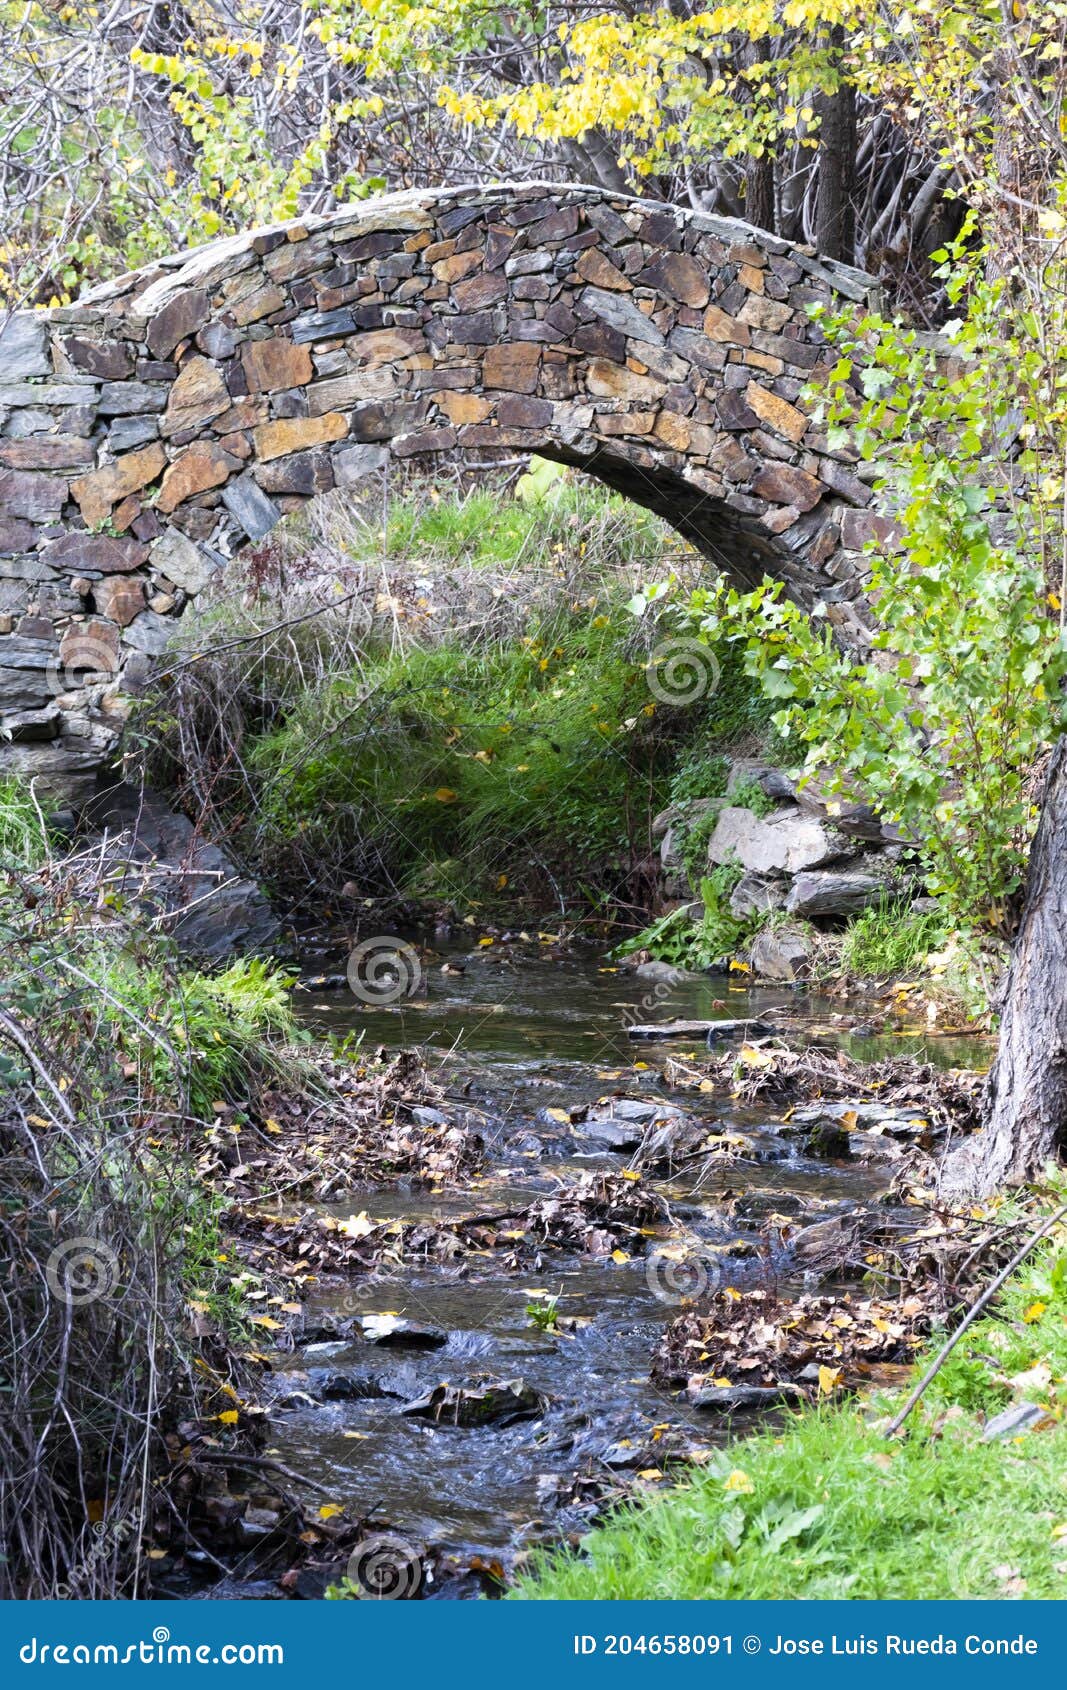 stone bridge over the stream in the town of patones de arriba. spain